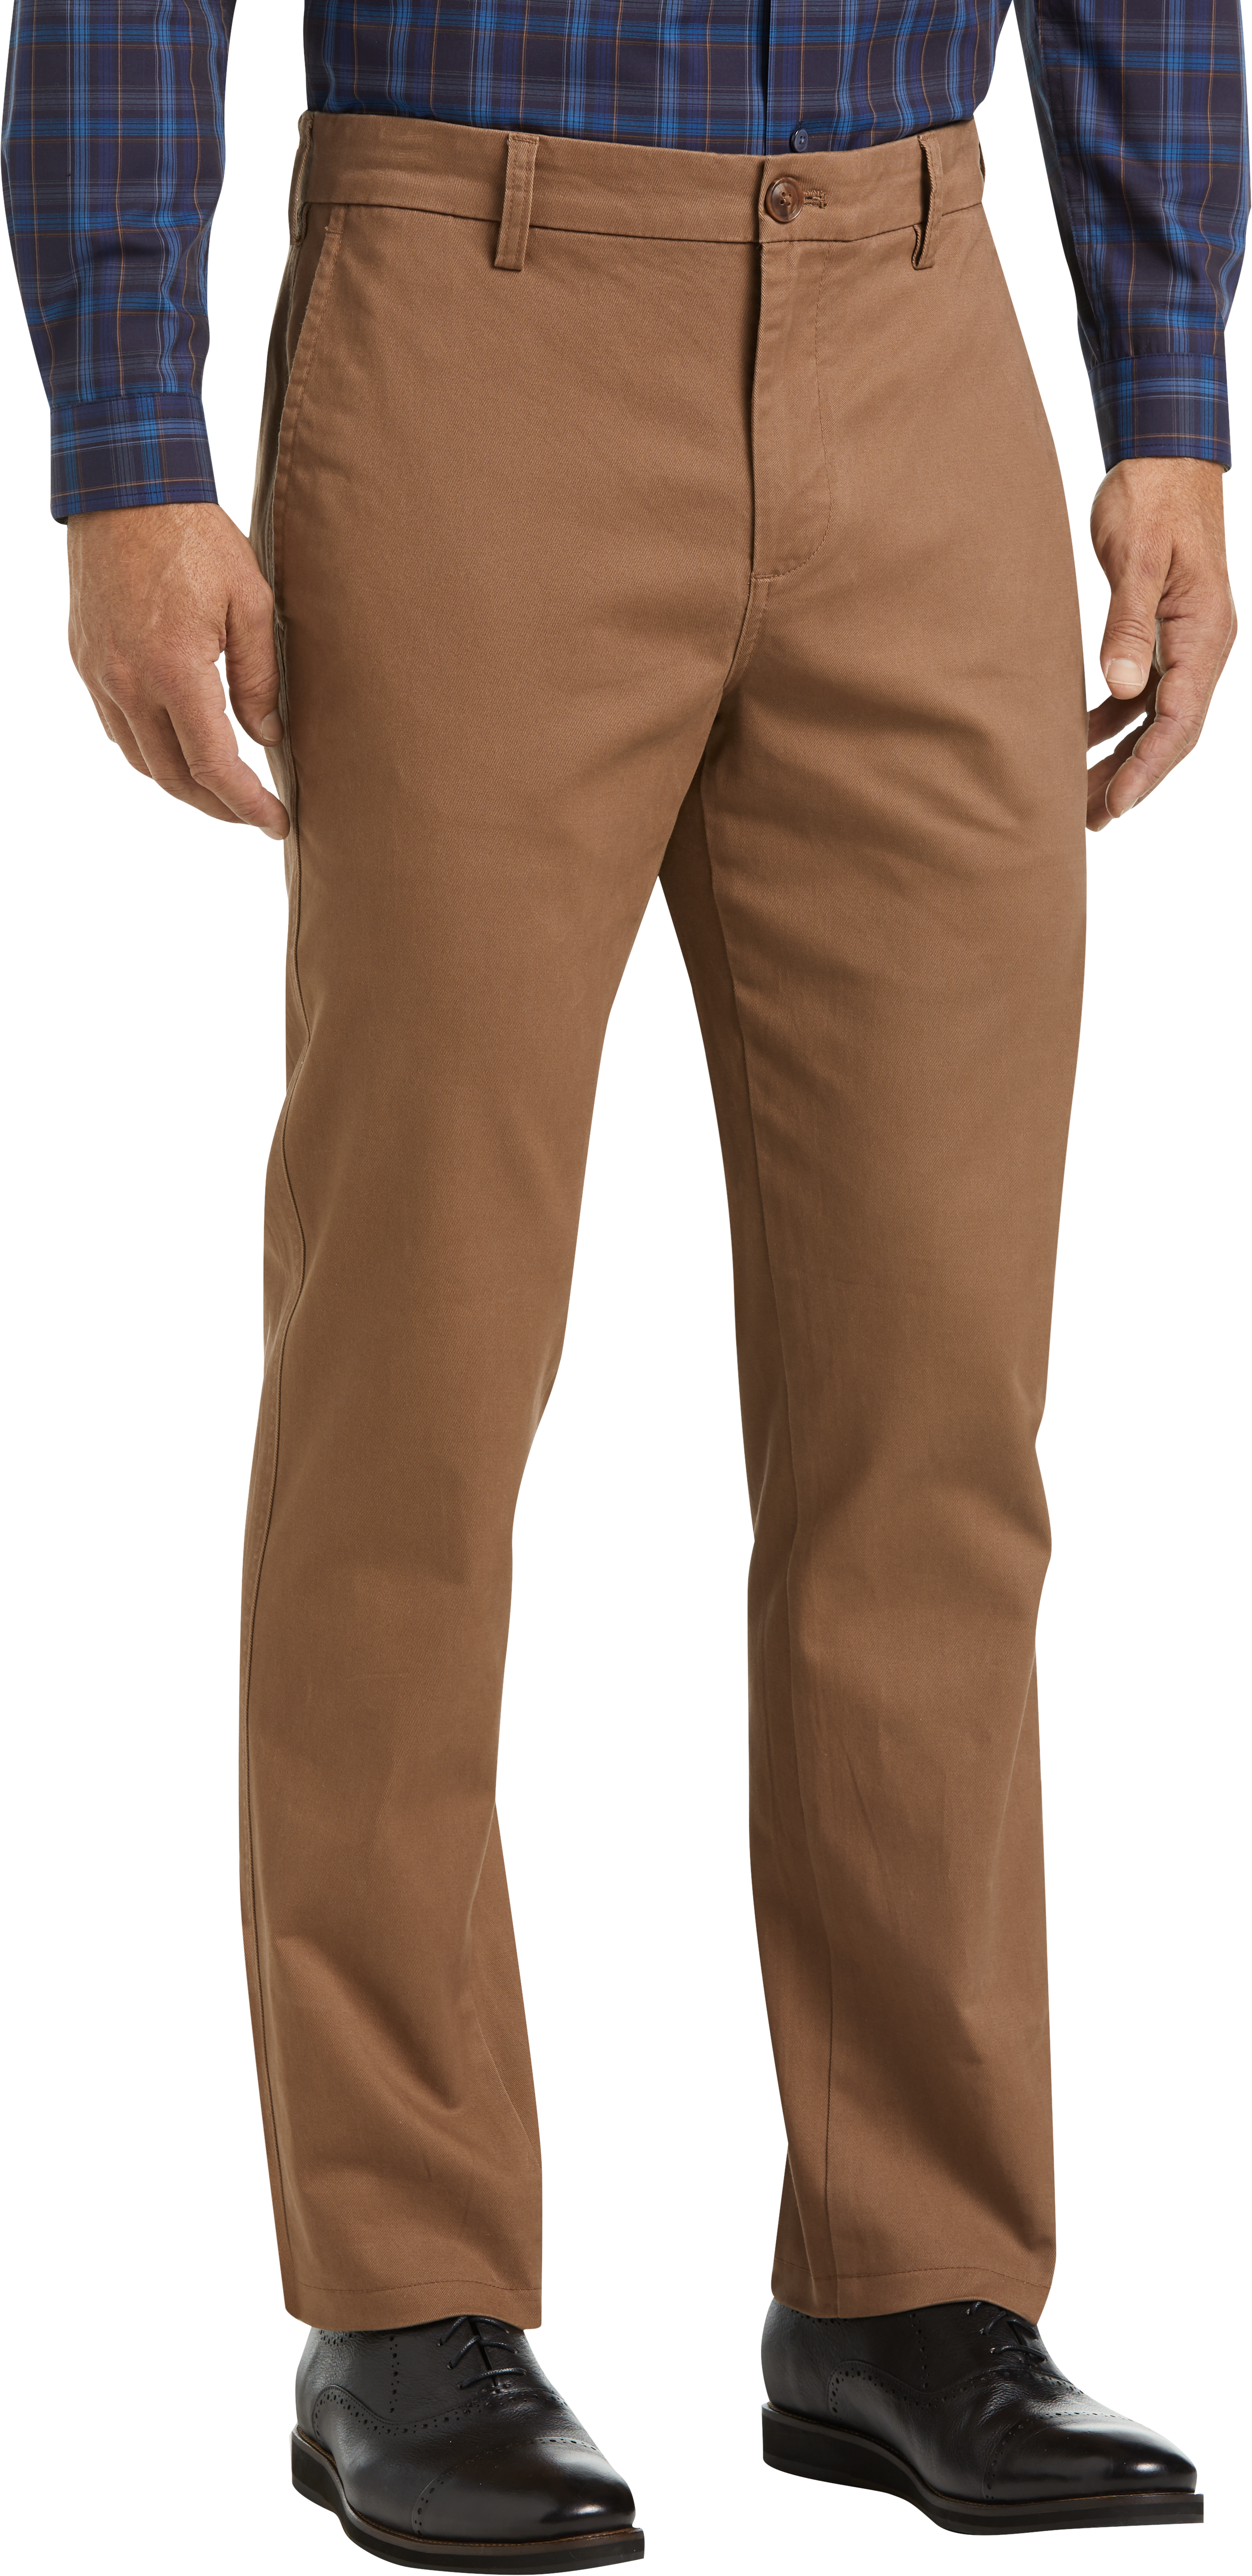 Joseph Abboud Cocoa Brown Slim Fit Chino - Men's Pants | Men's Wearhouse